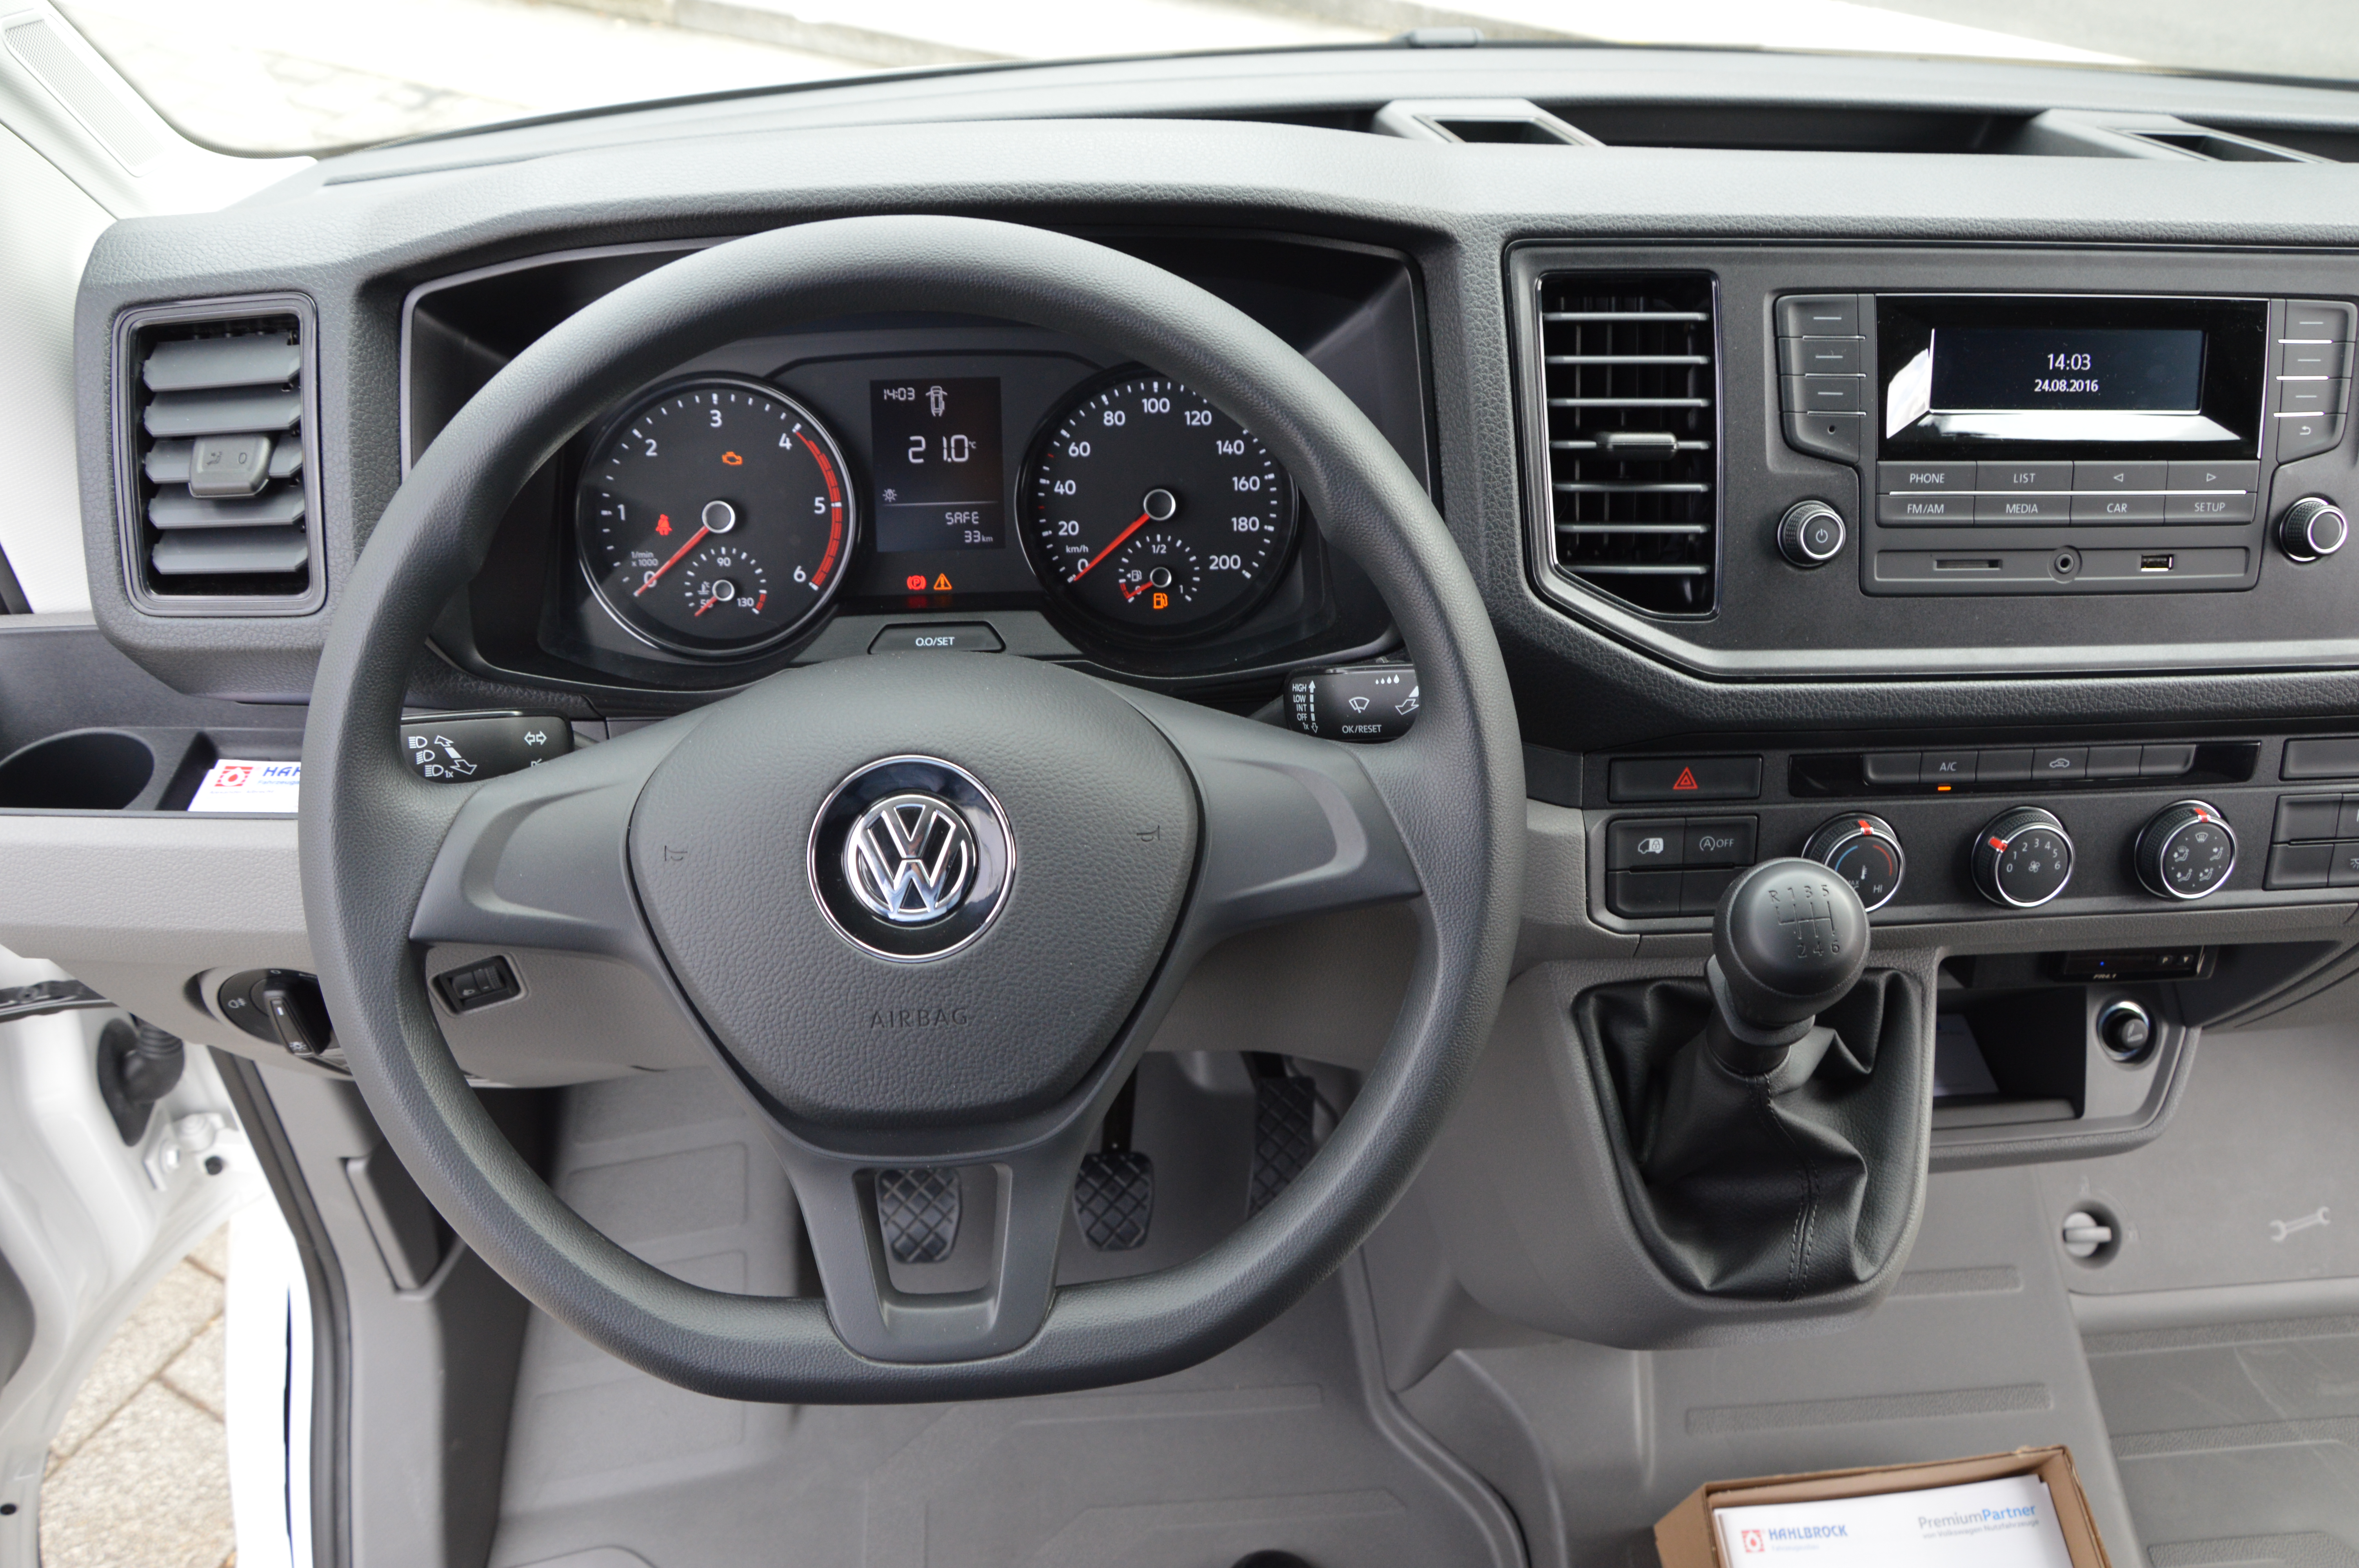 Volkswagen Crafter Kasten interior specifications